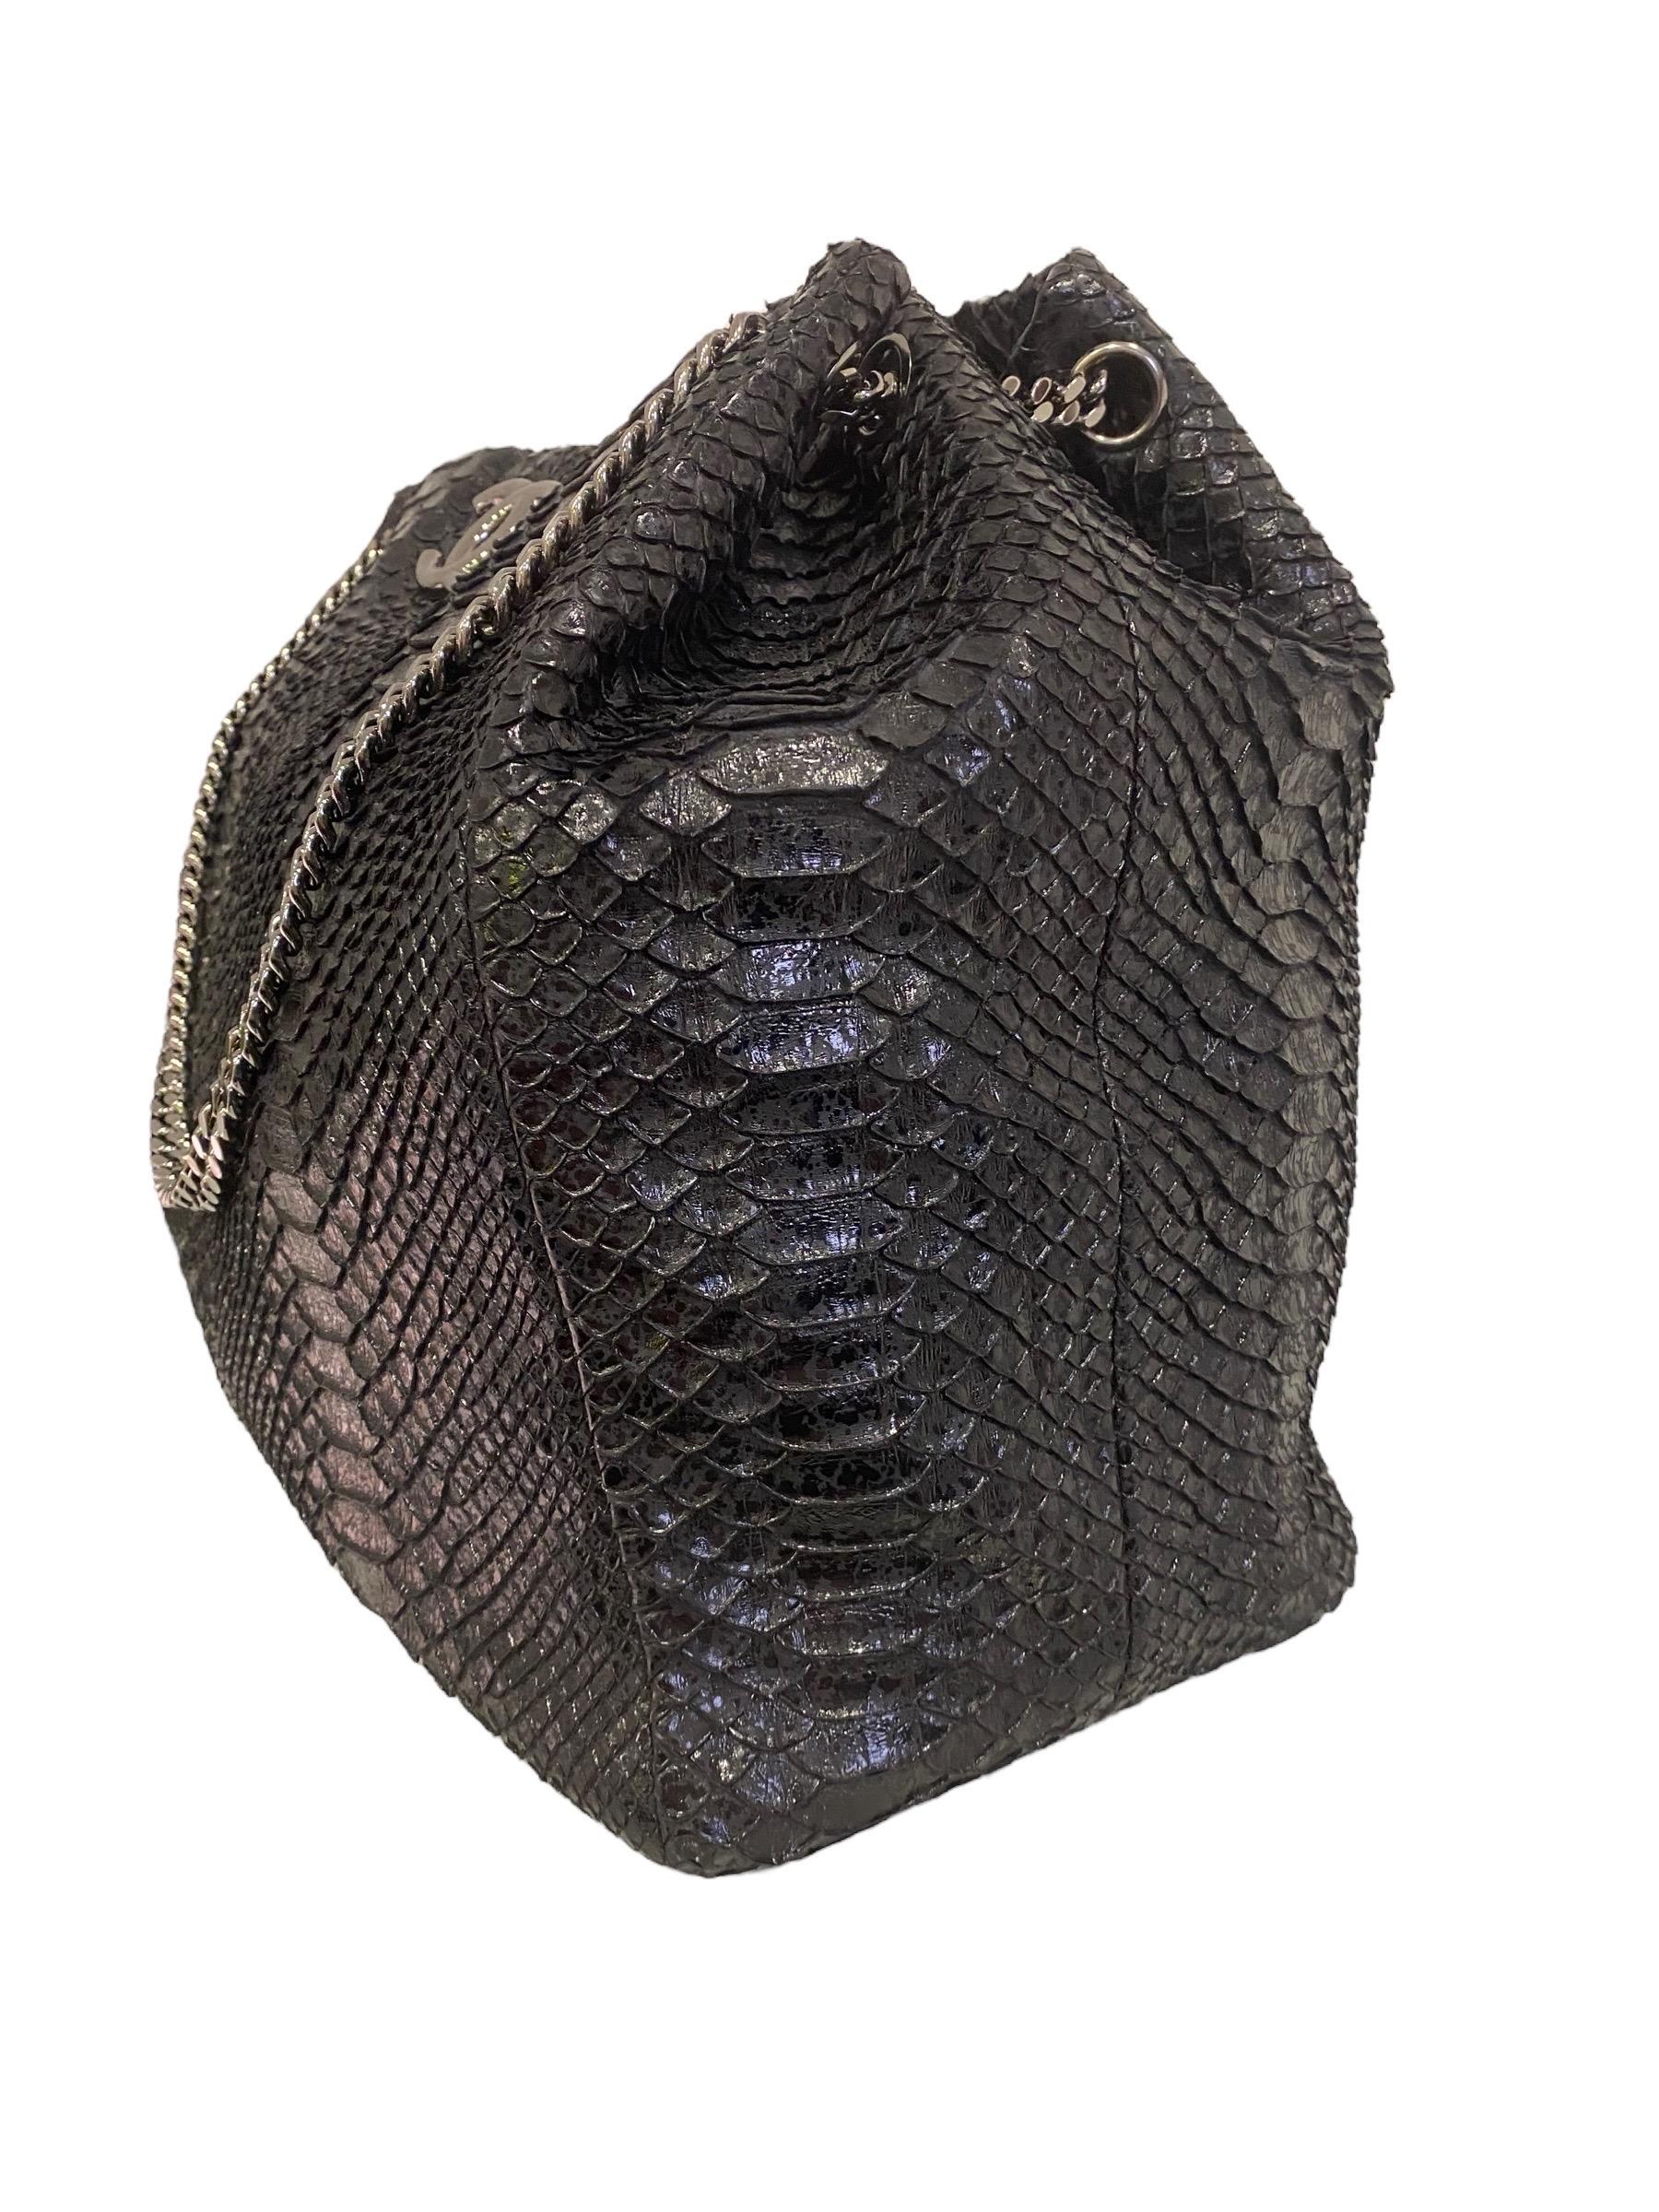 Women's 2009 Chanel Tote Black Piton Hobo Bag For Sale